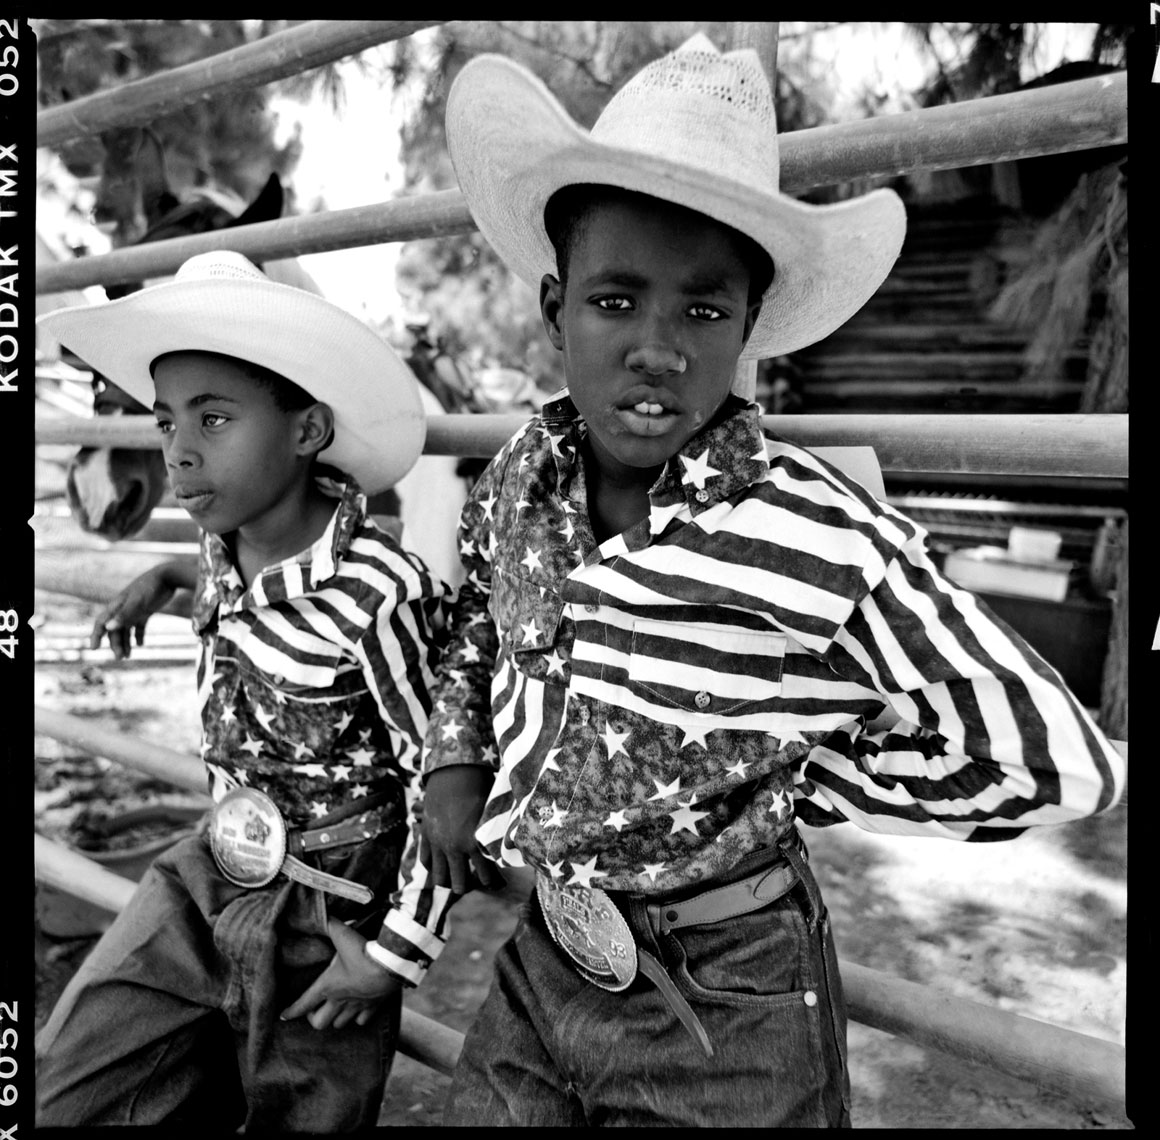 MANUELLO PAGANELLI  Photographer  / PORTRAITS, EDITORIAL, CELEBRITIES / SPORTS , TRAVEL, ADVENTURE / LIFESTYLE, FASHION /MAGAZINE, WORKSHOPS - HOLLYWOOD, SAN FRANCISCO, LOS ANGELES California - BLACK COWBOYS DOCUMENTARY -